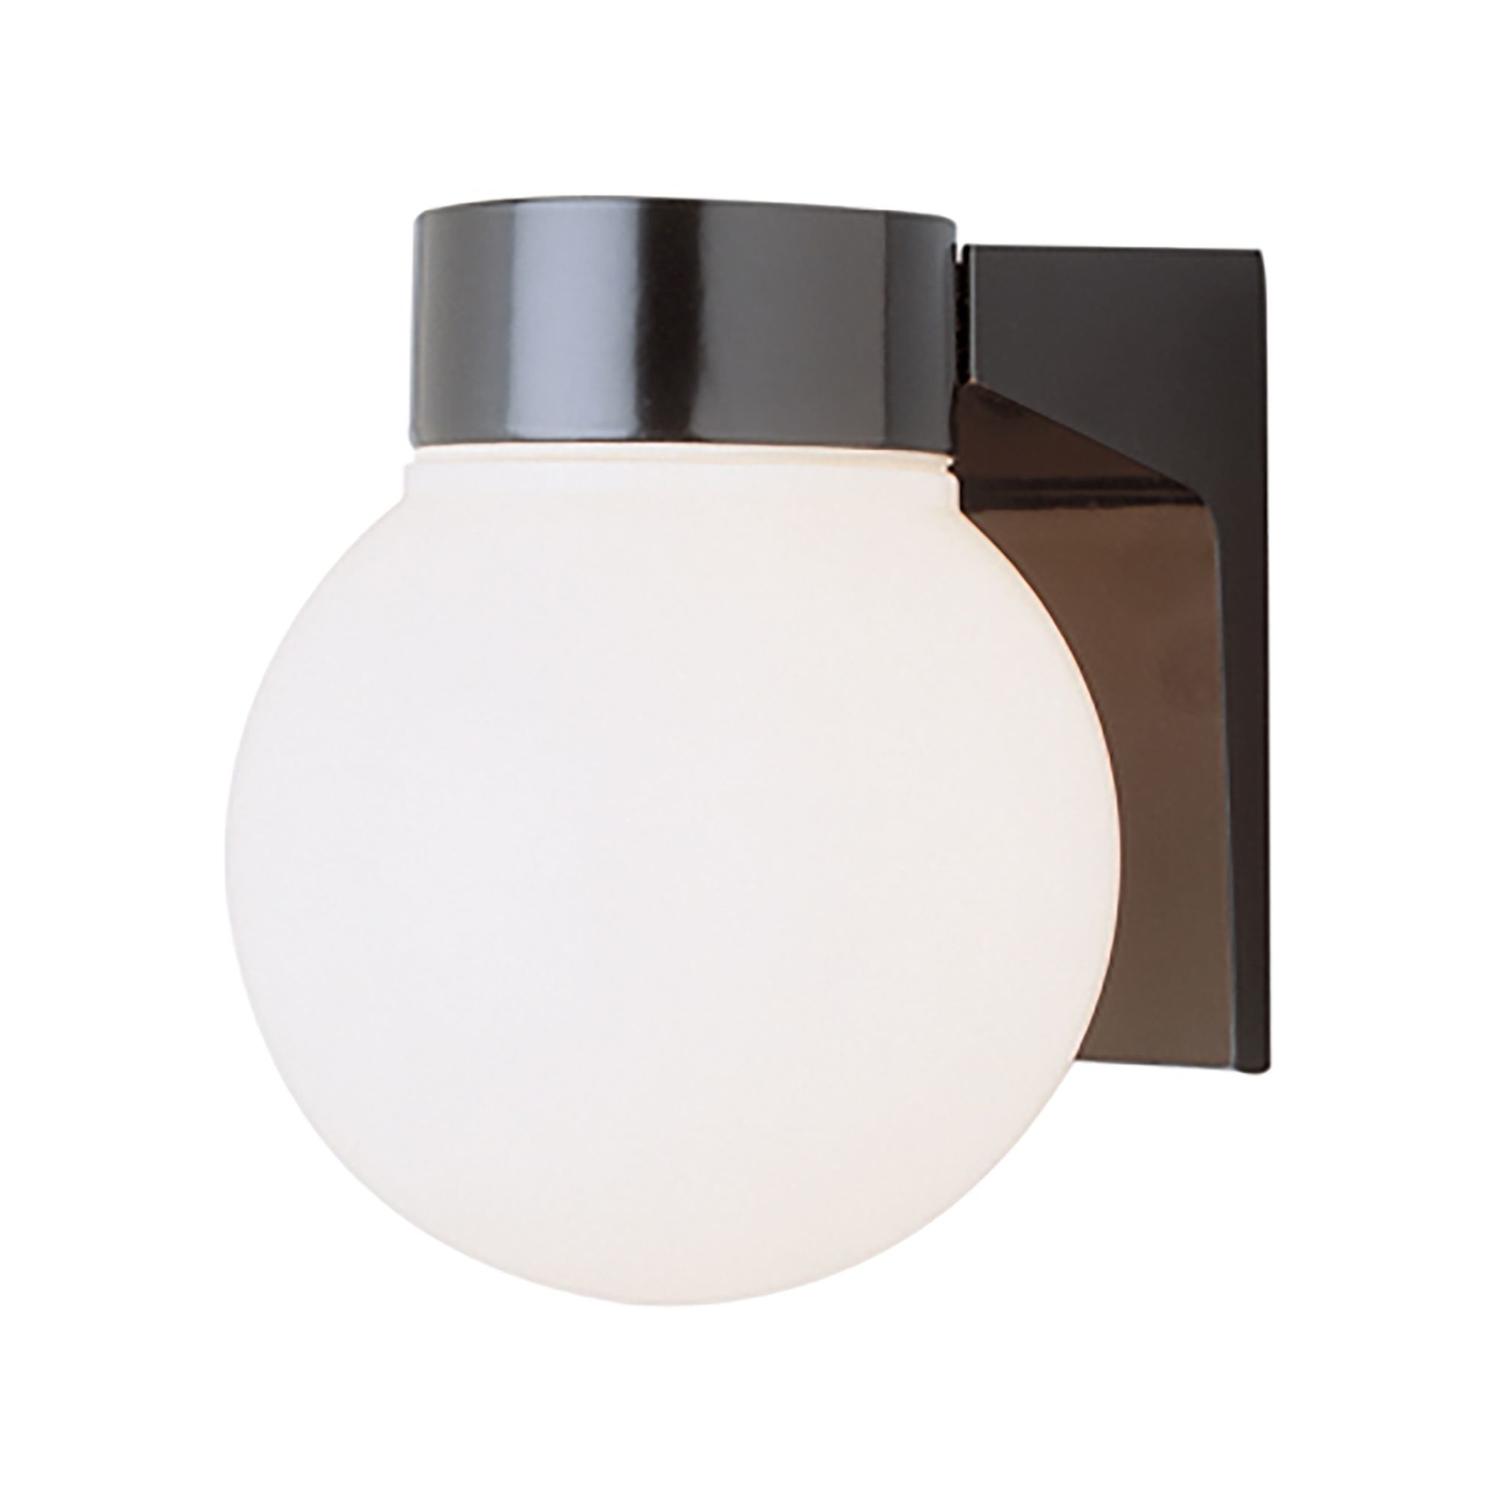 Bel Air Lighting Pershing Black Switch Incandescent Wall Lantern - image 1 of 2